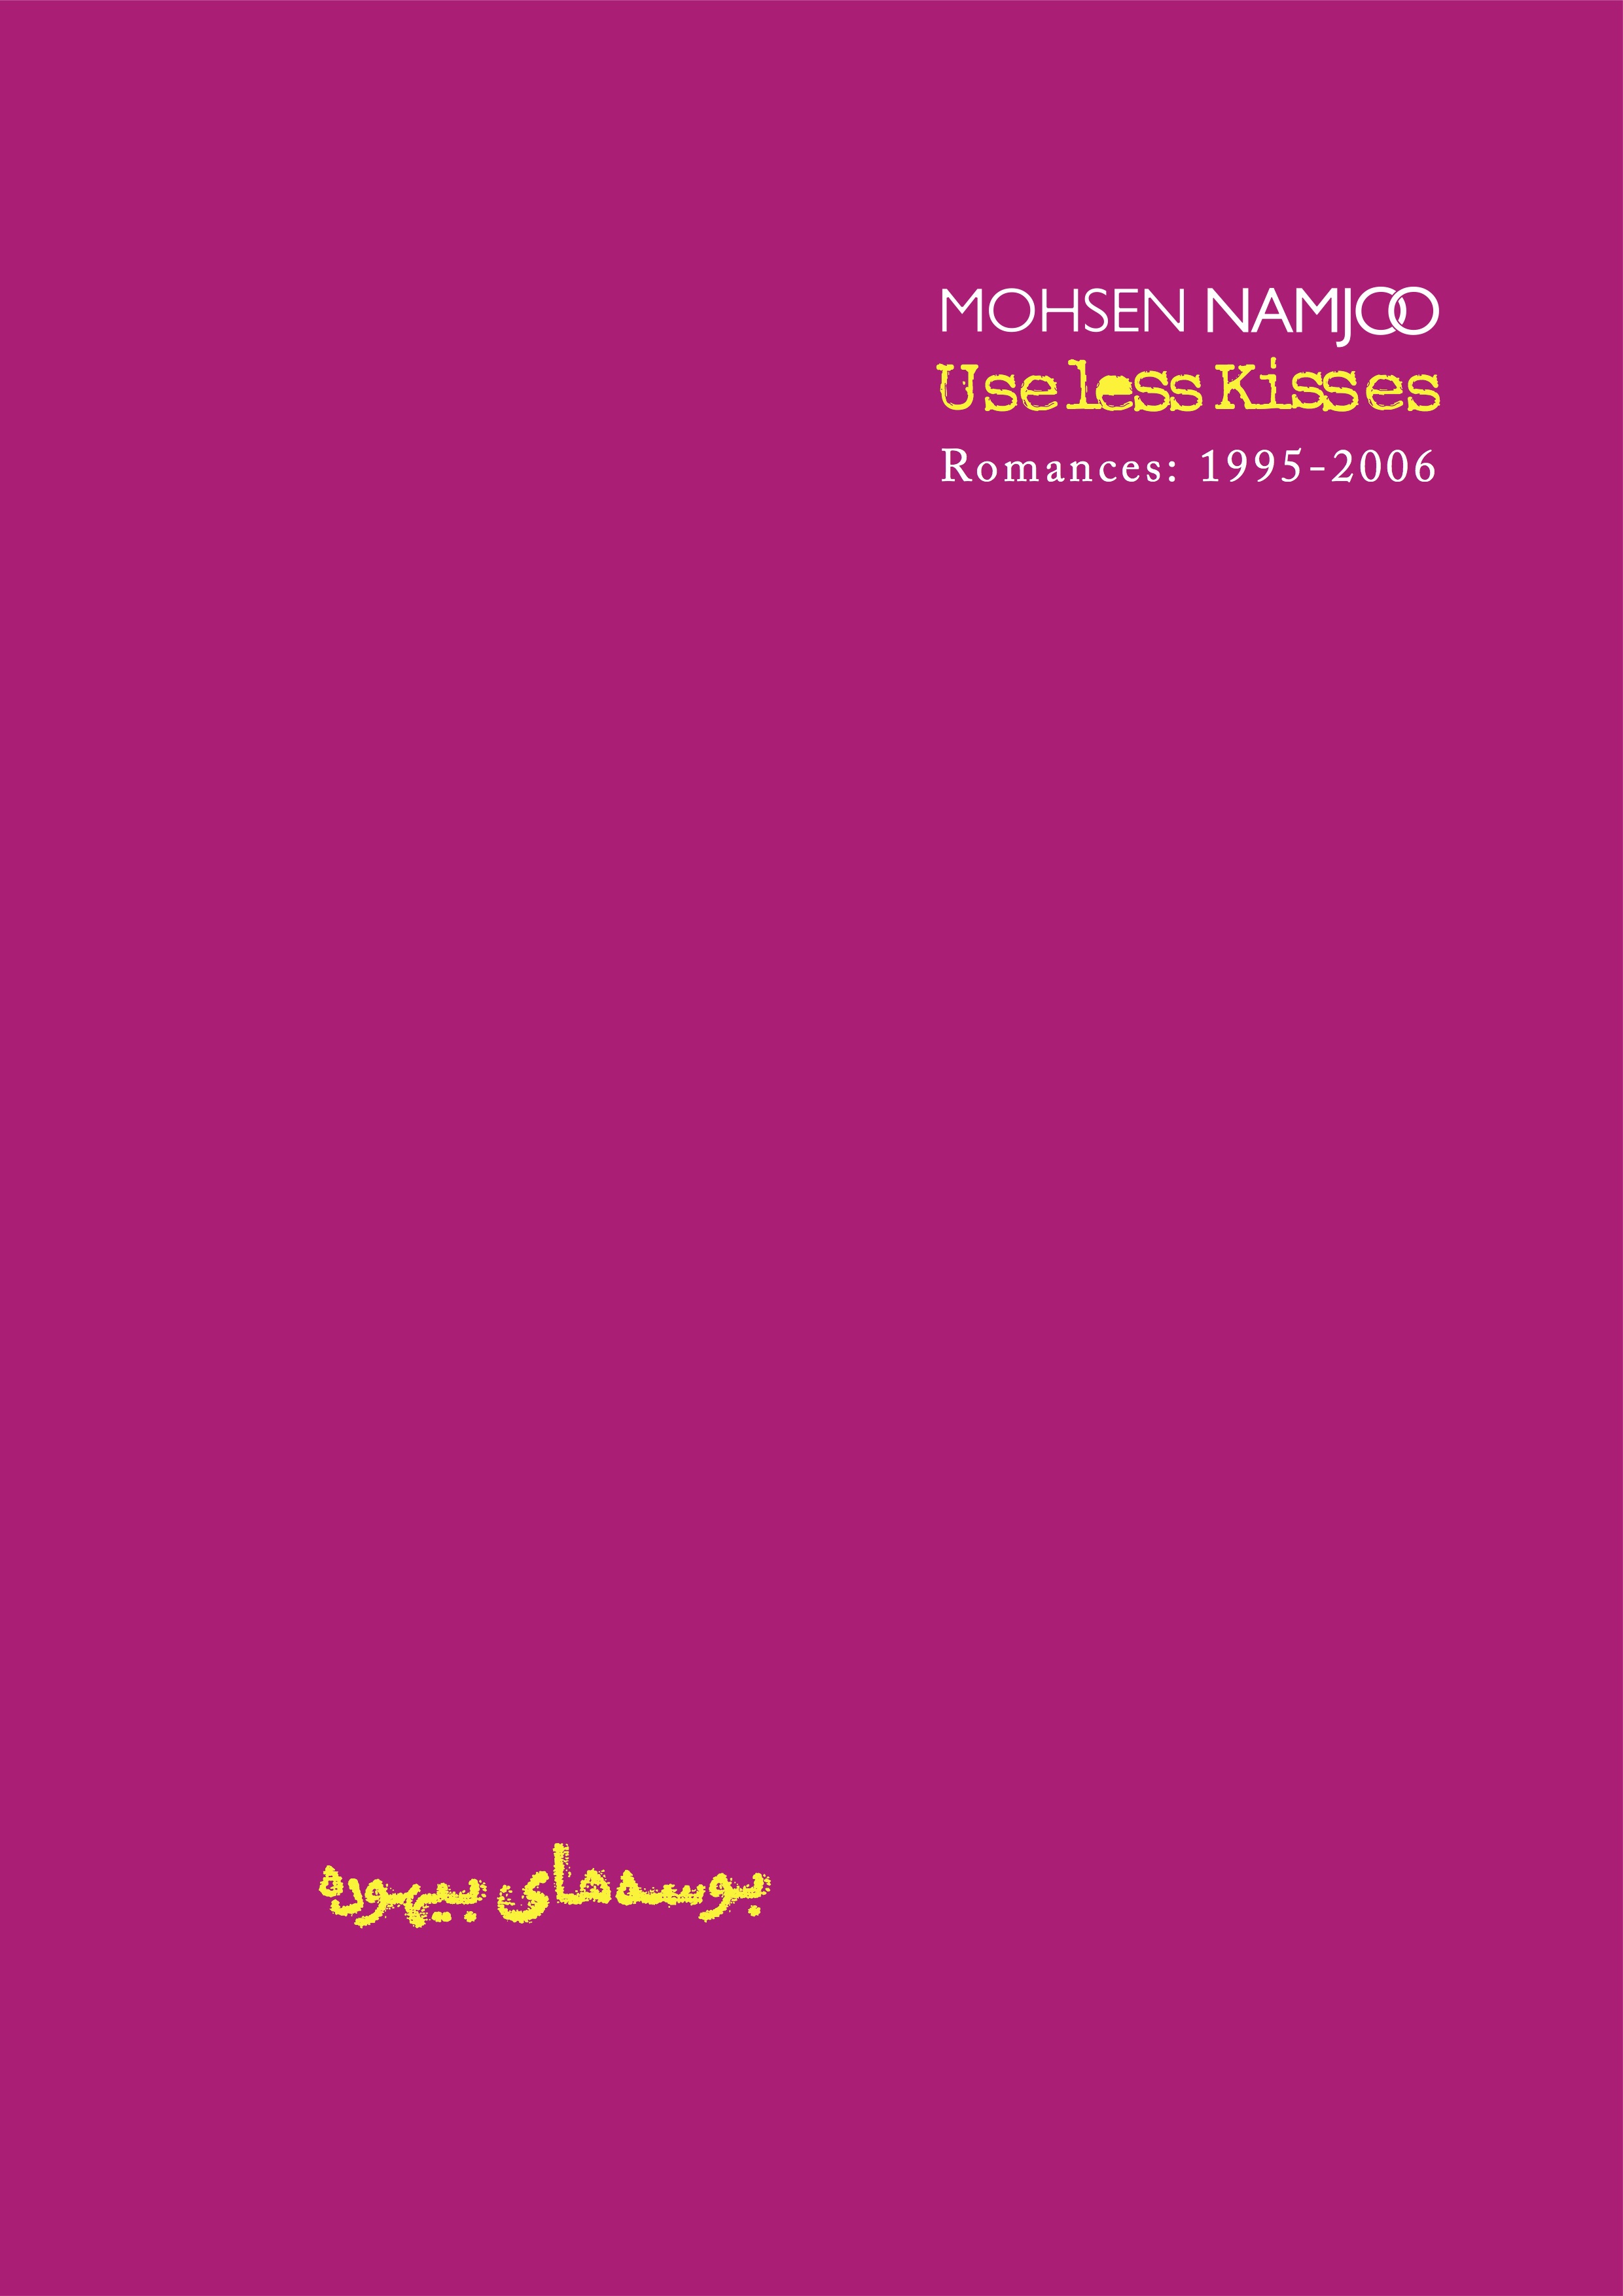 00Useless Kisses eBook (2nd Edition).jpg